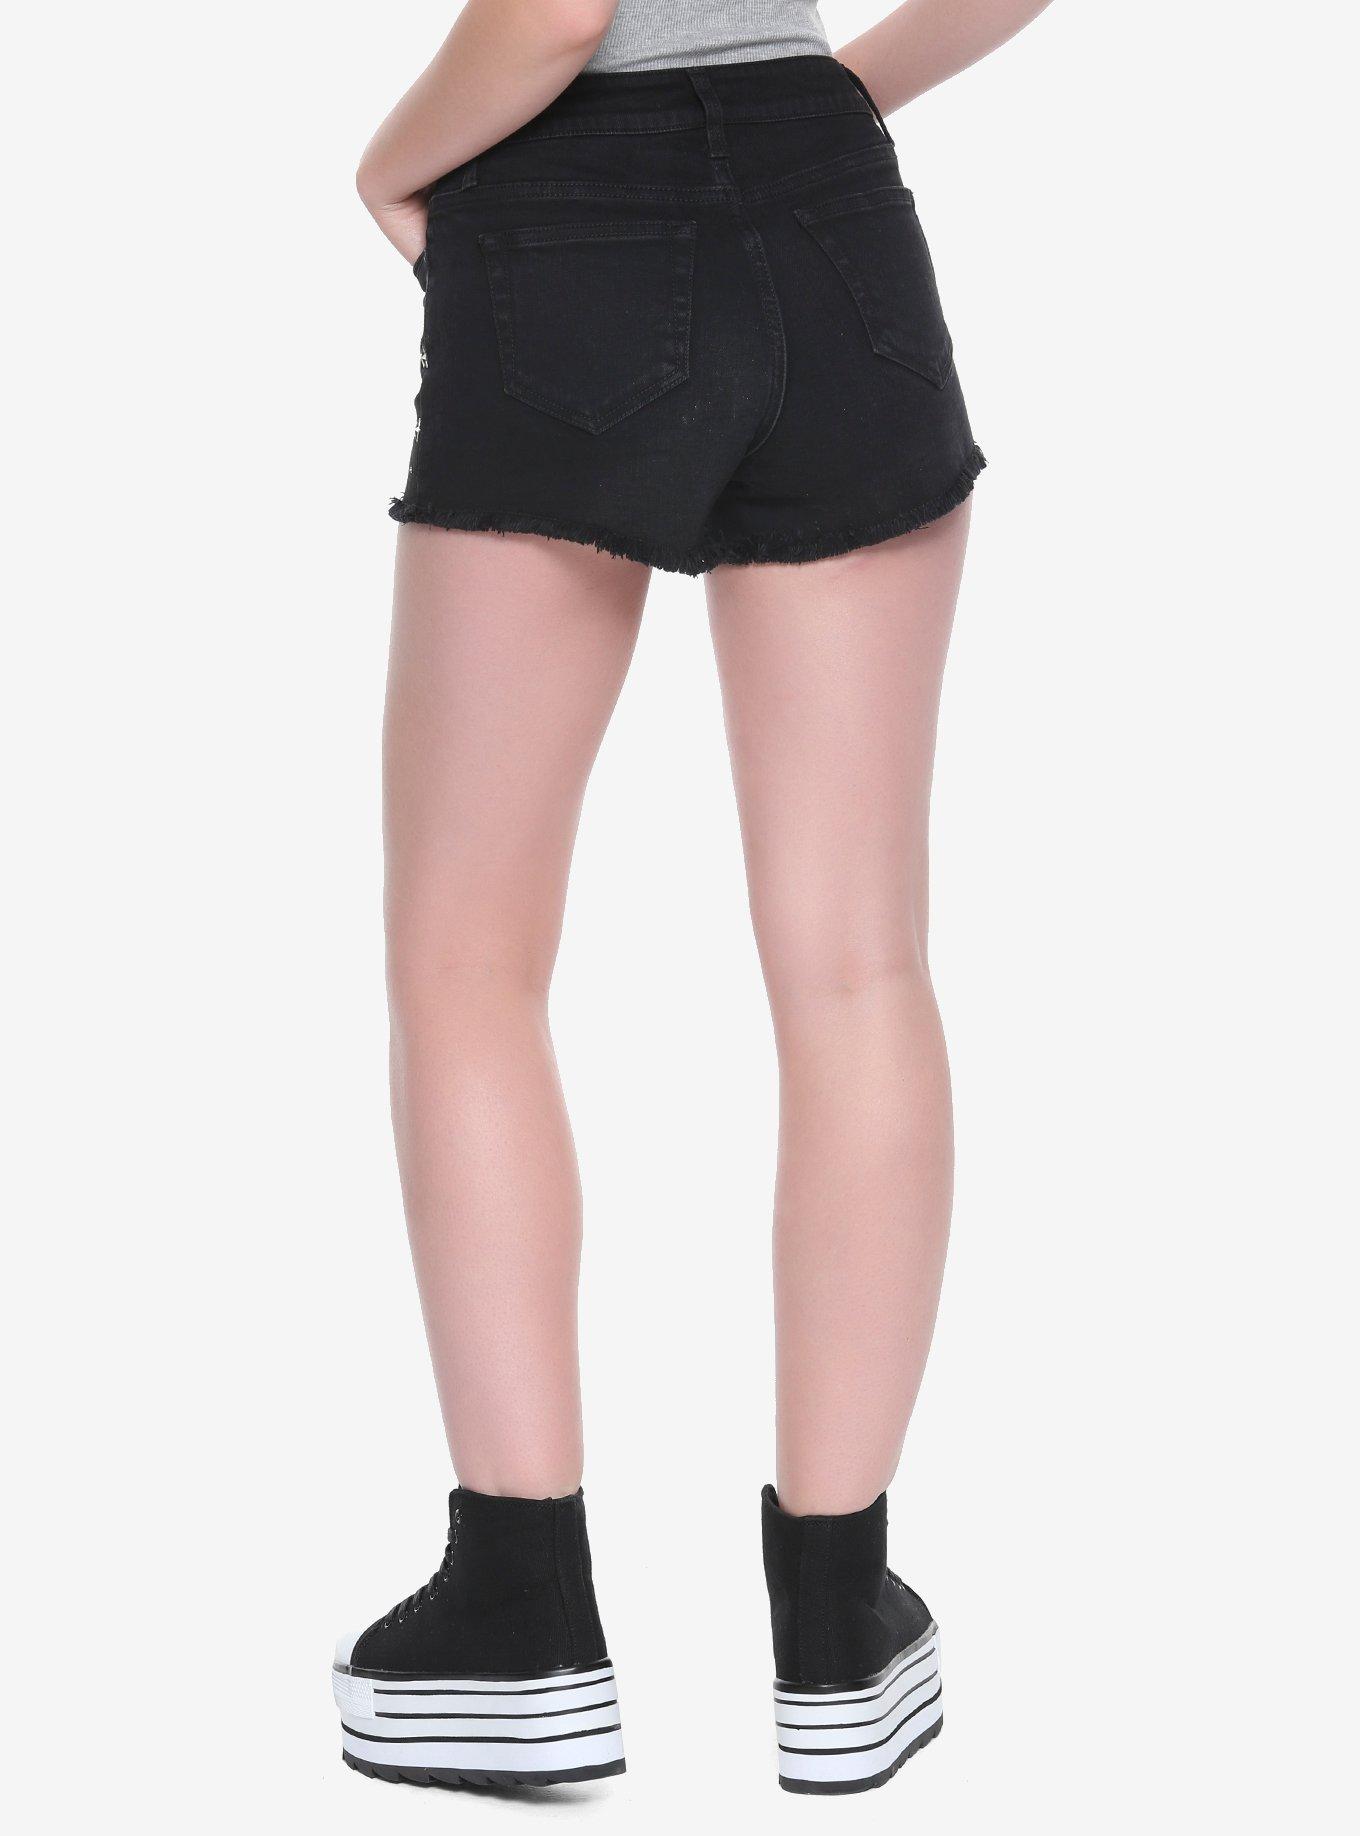 Blackheart Black Star Studded High-Waist Shorts, , alternate